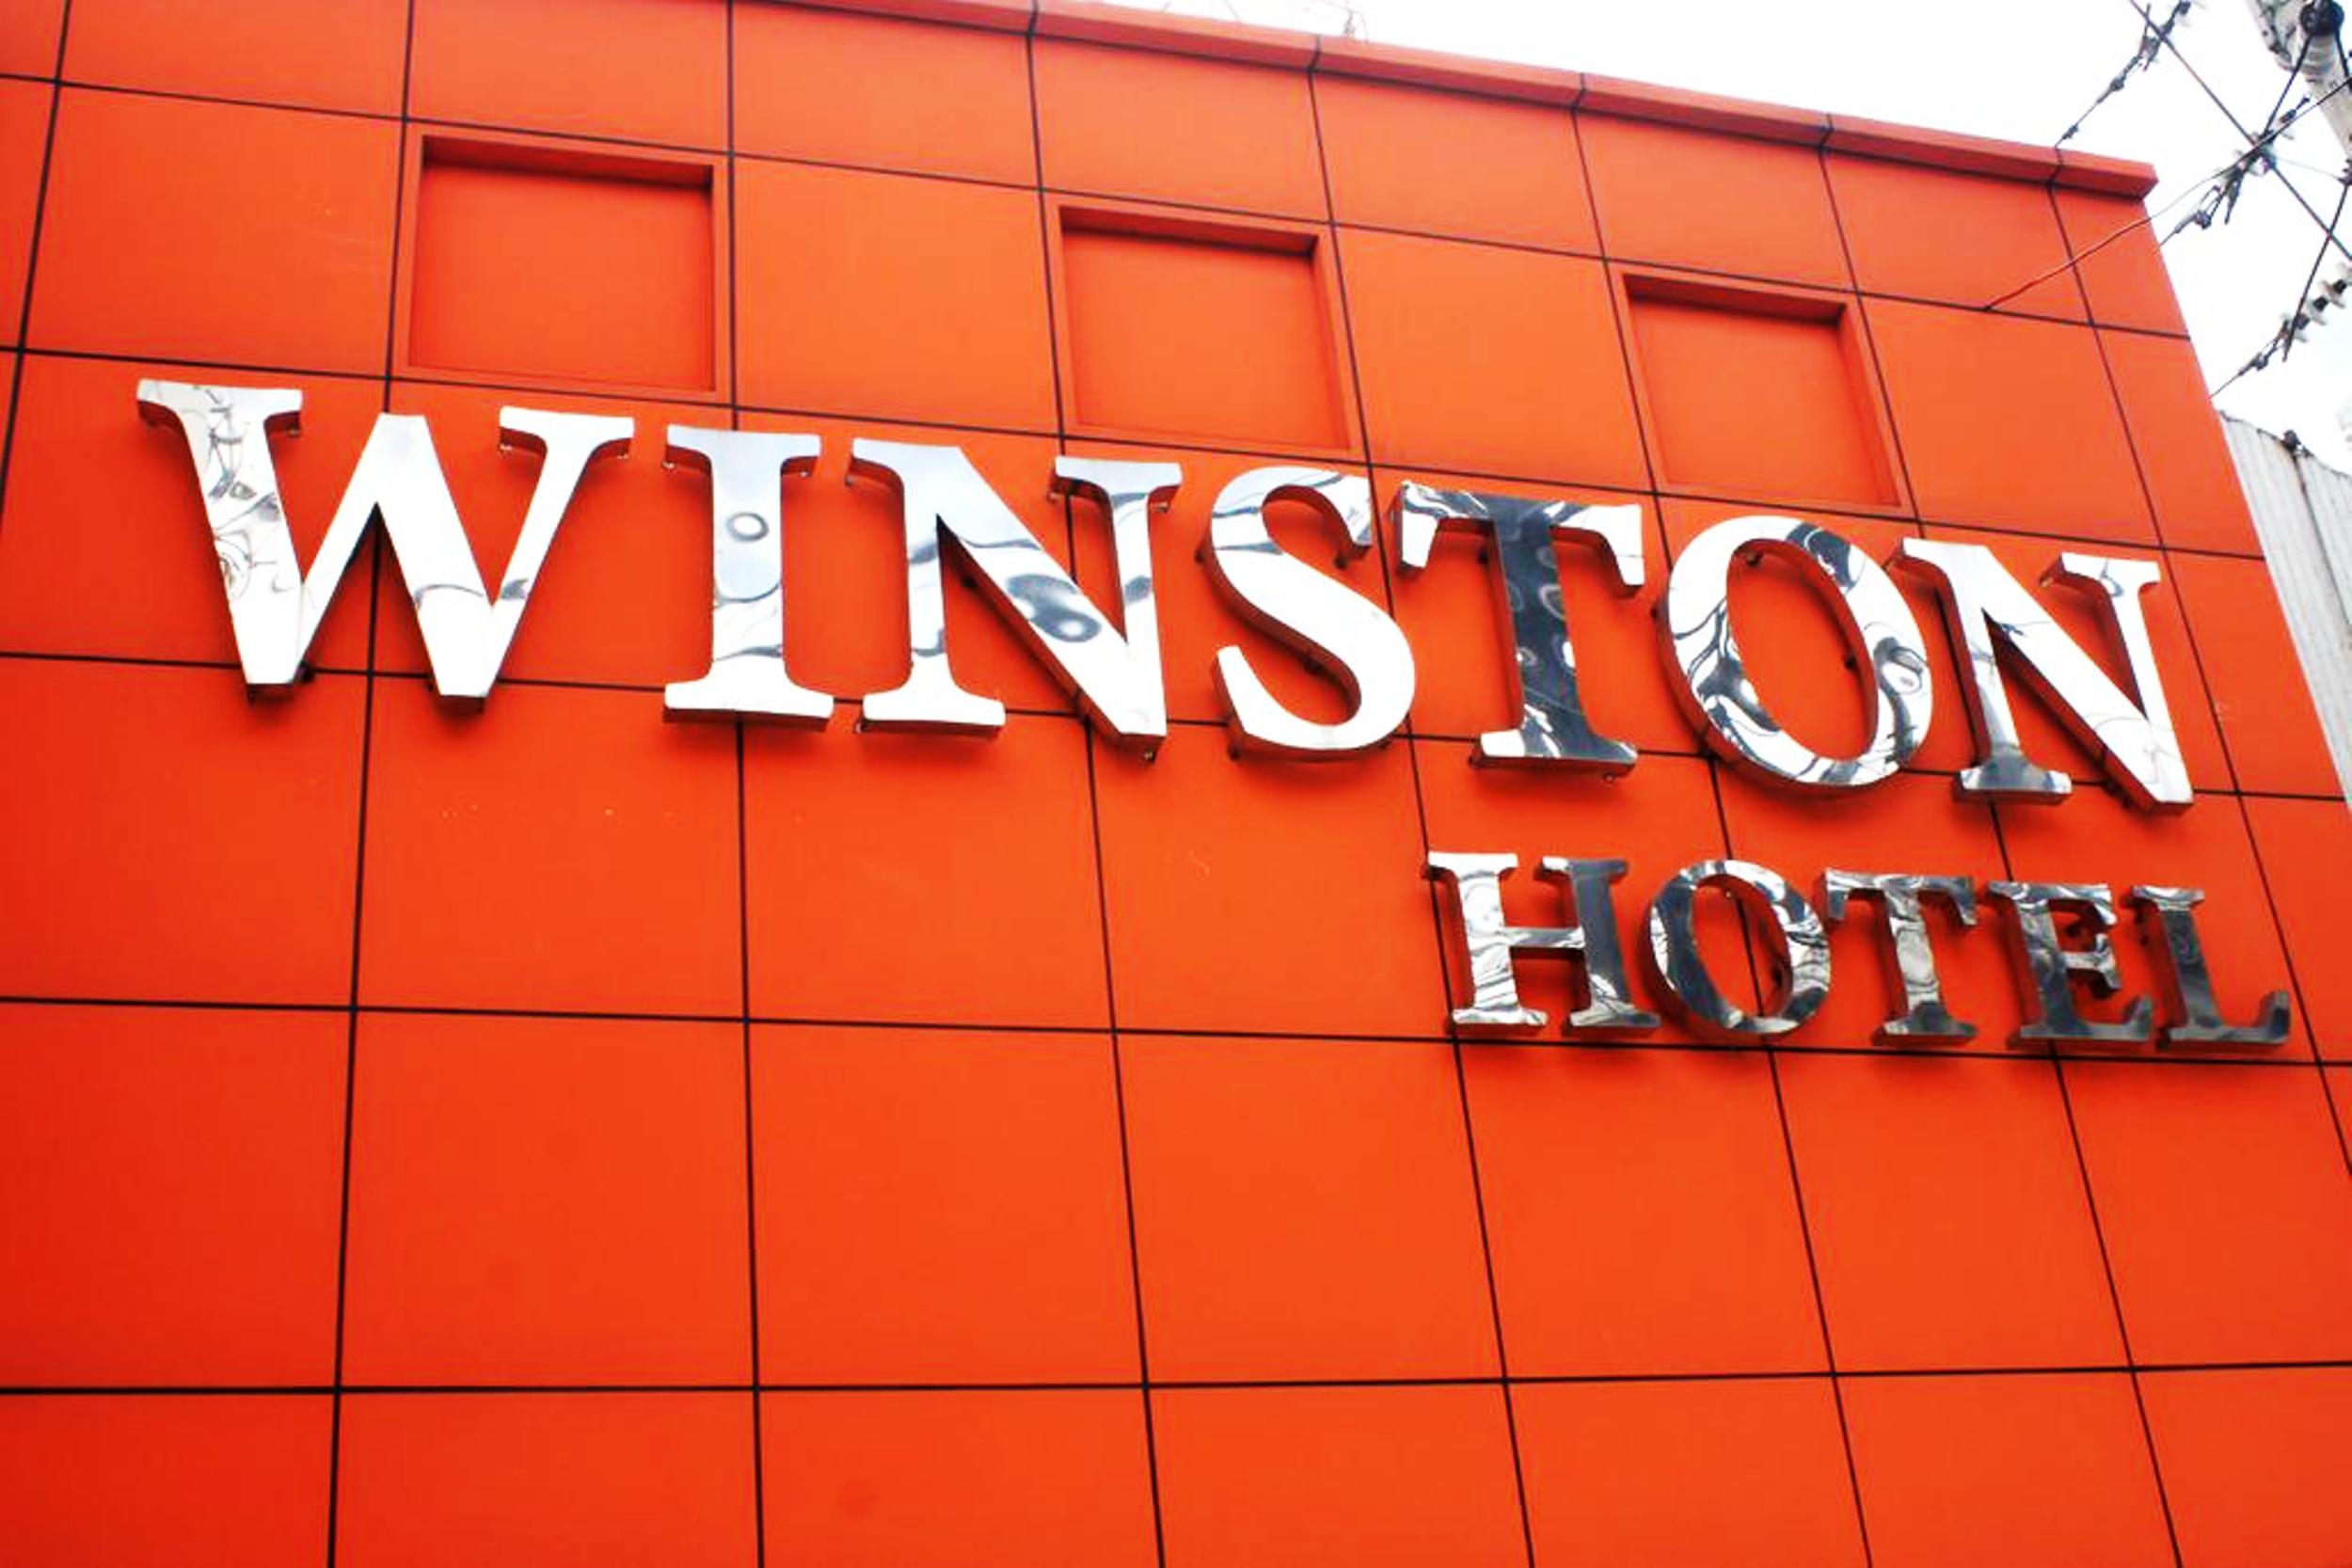 Winston Hotel